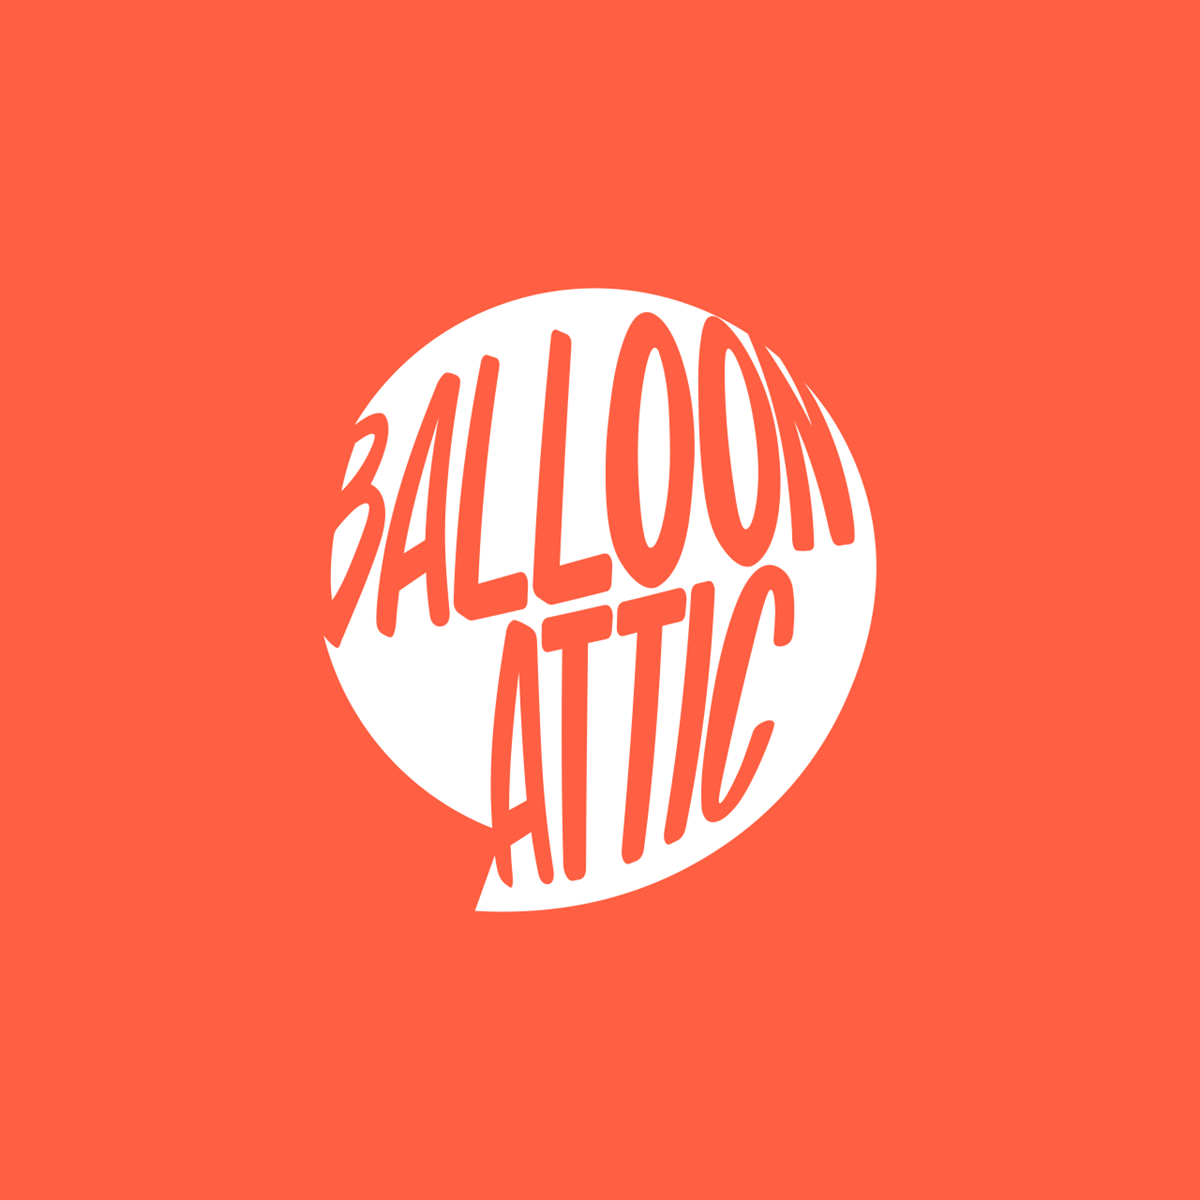 Balloon Attic final brand design on a solid orange background.